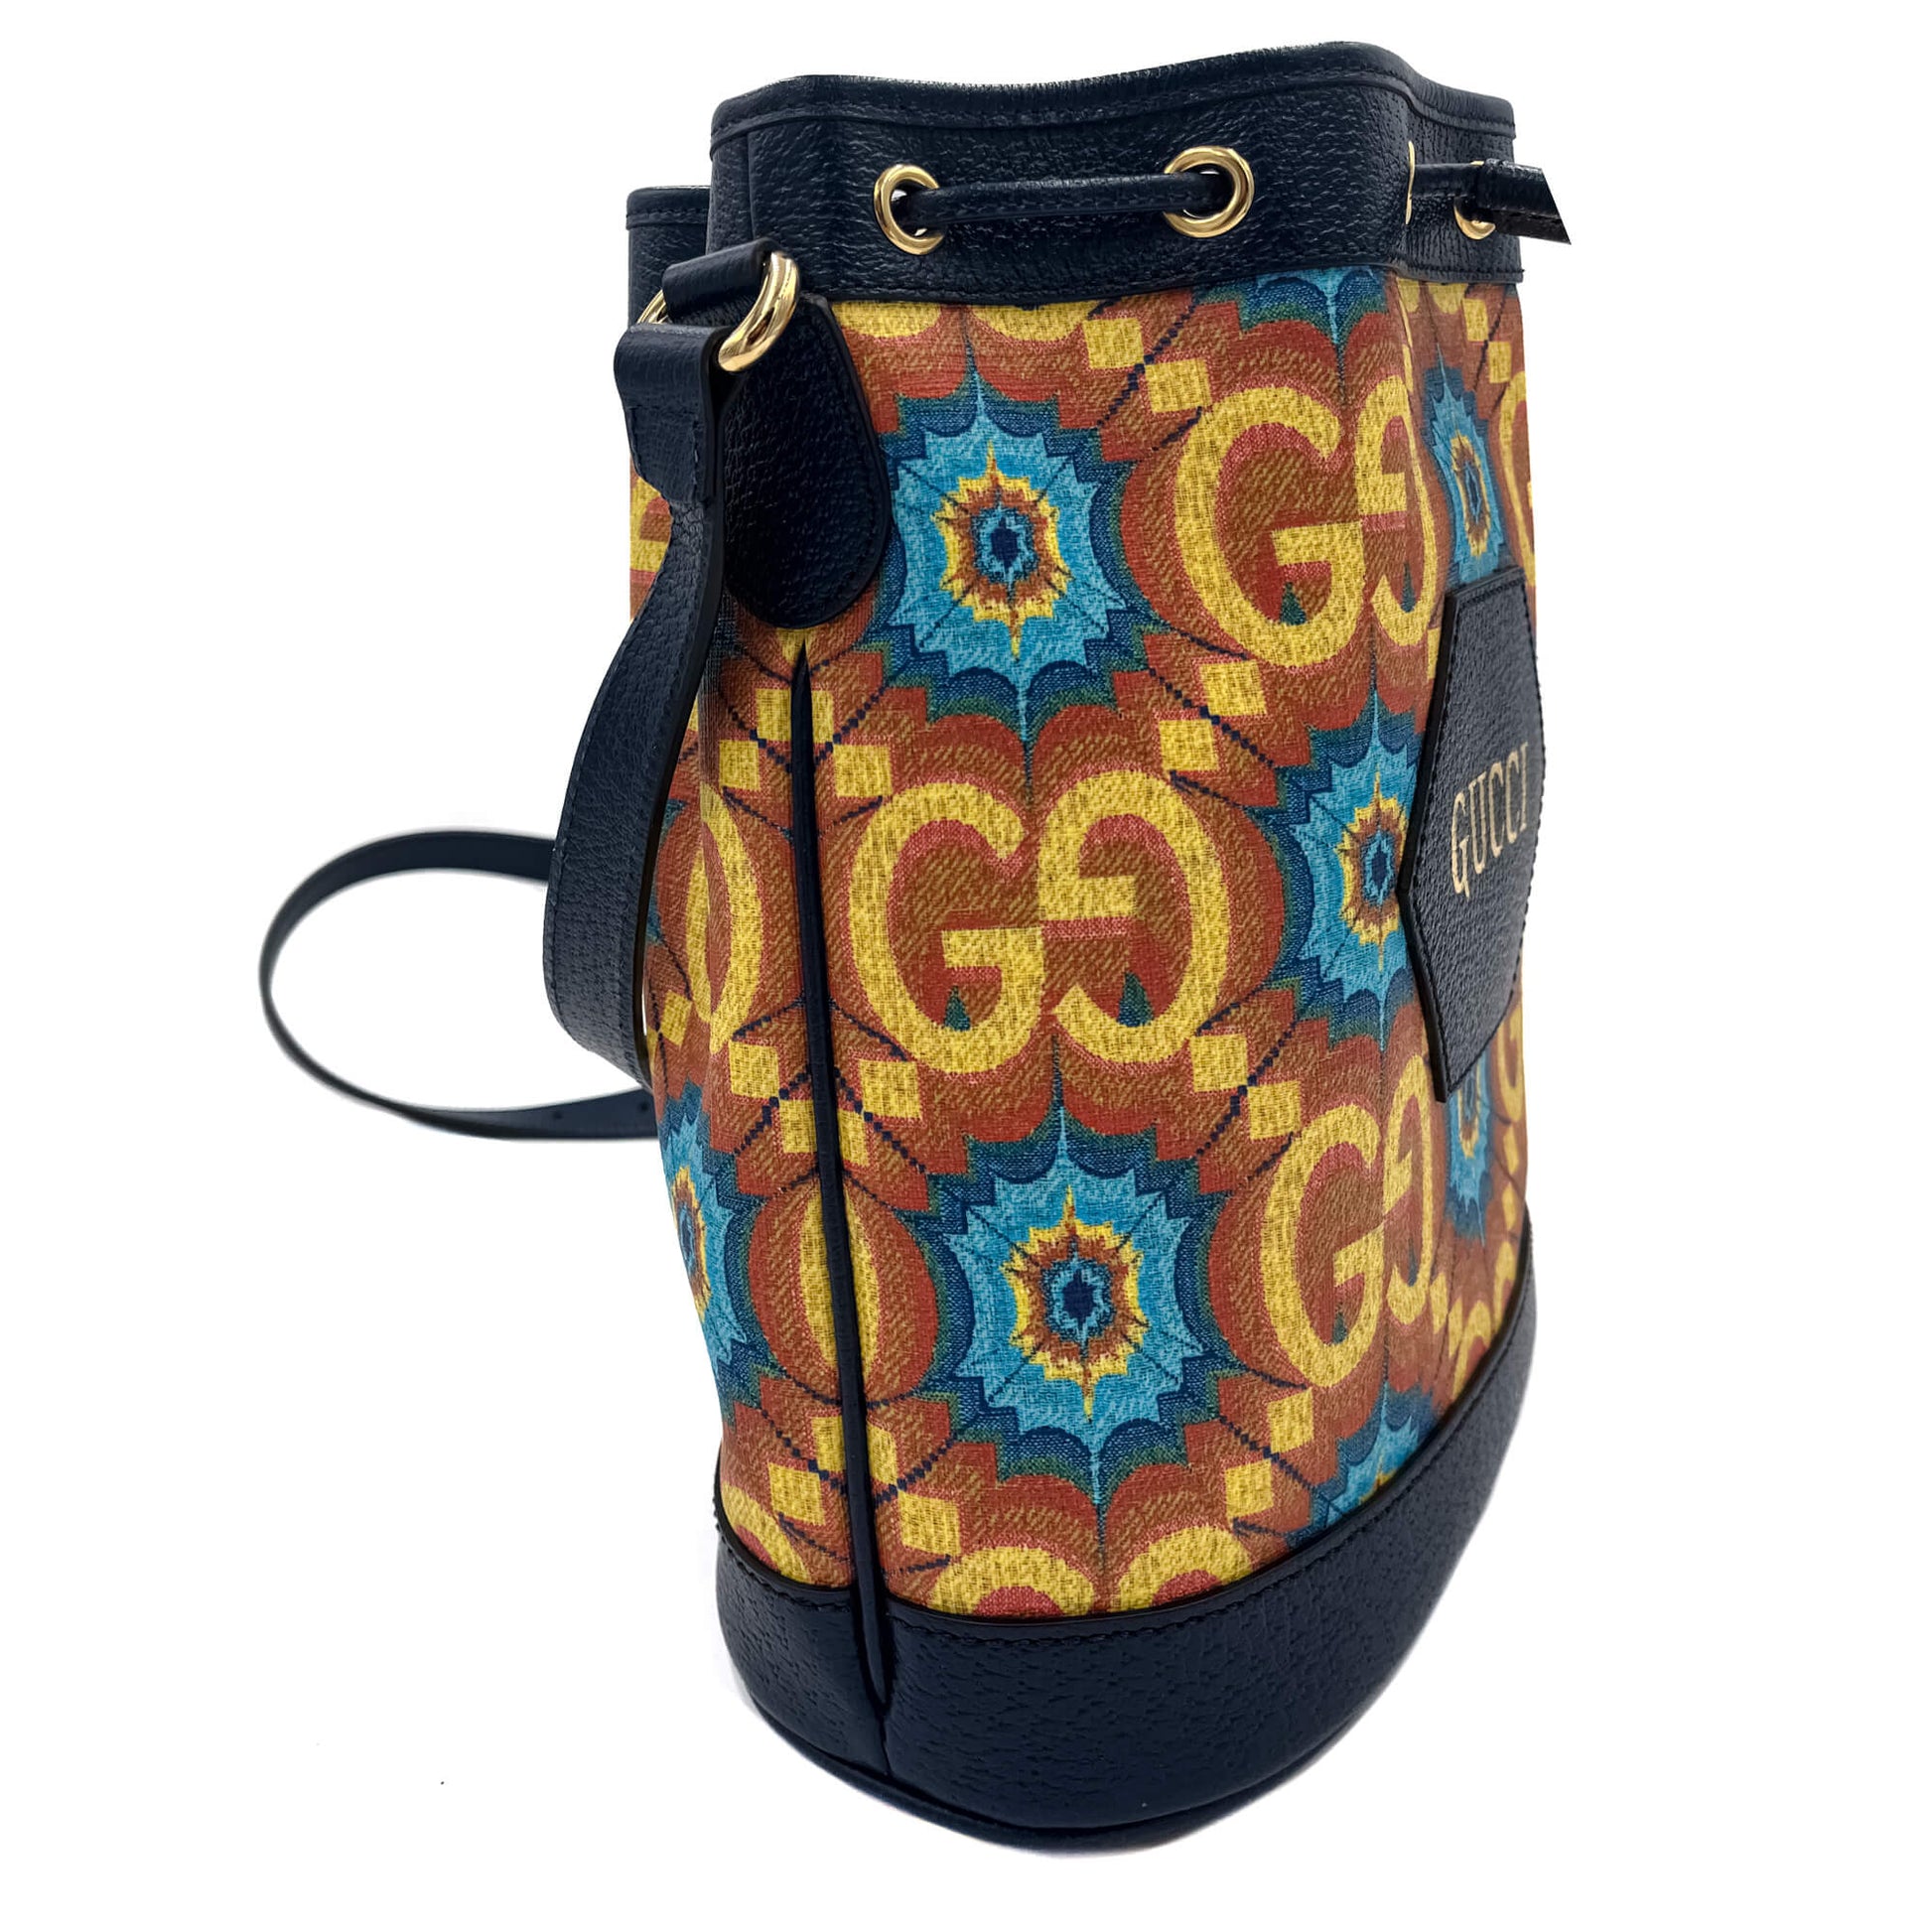 Gucci GG Kaleidoscope Canvas Bucket Bag